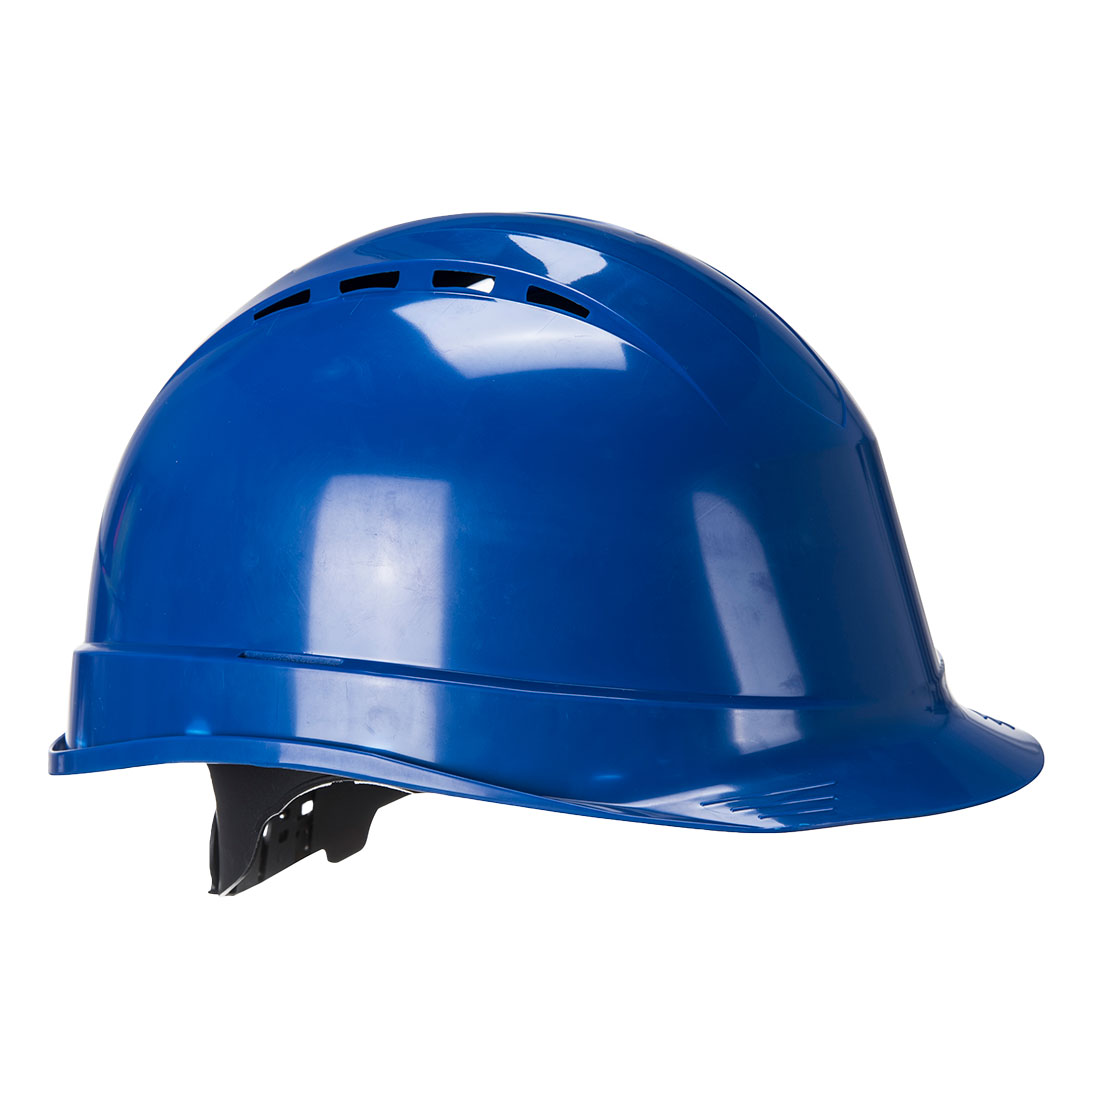 Portwest Arrow Safety Helmet